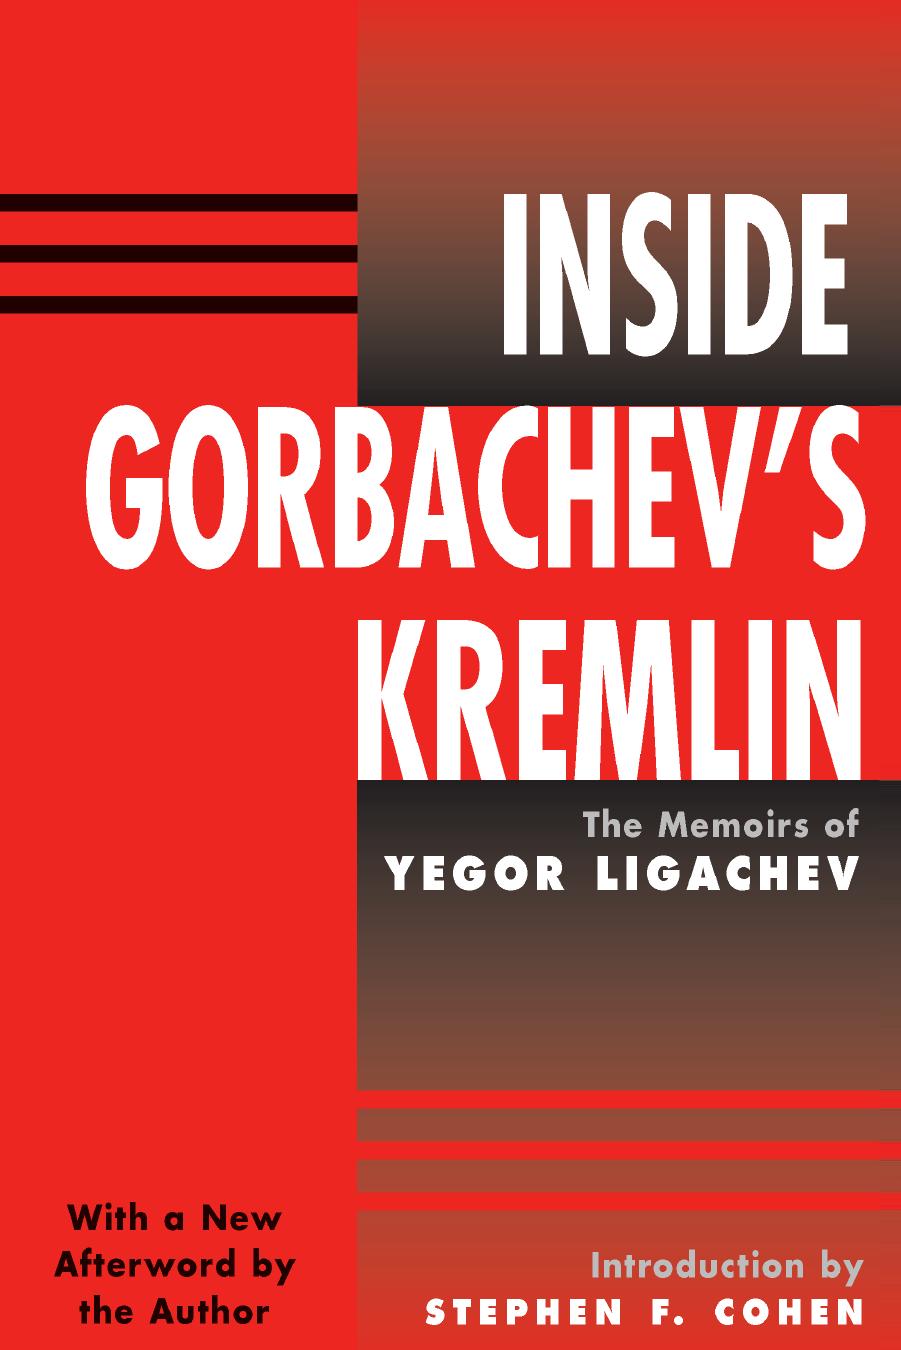 Inside Gorbachev's Kremlin: The Memoirs Of Yegor Ligachev by Yegor Ligachev